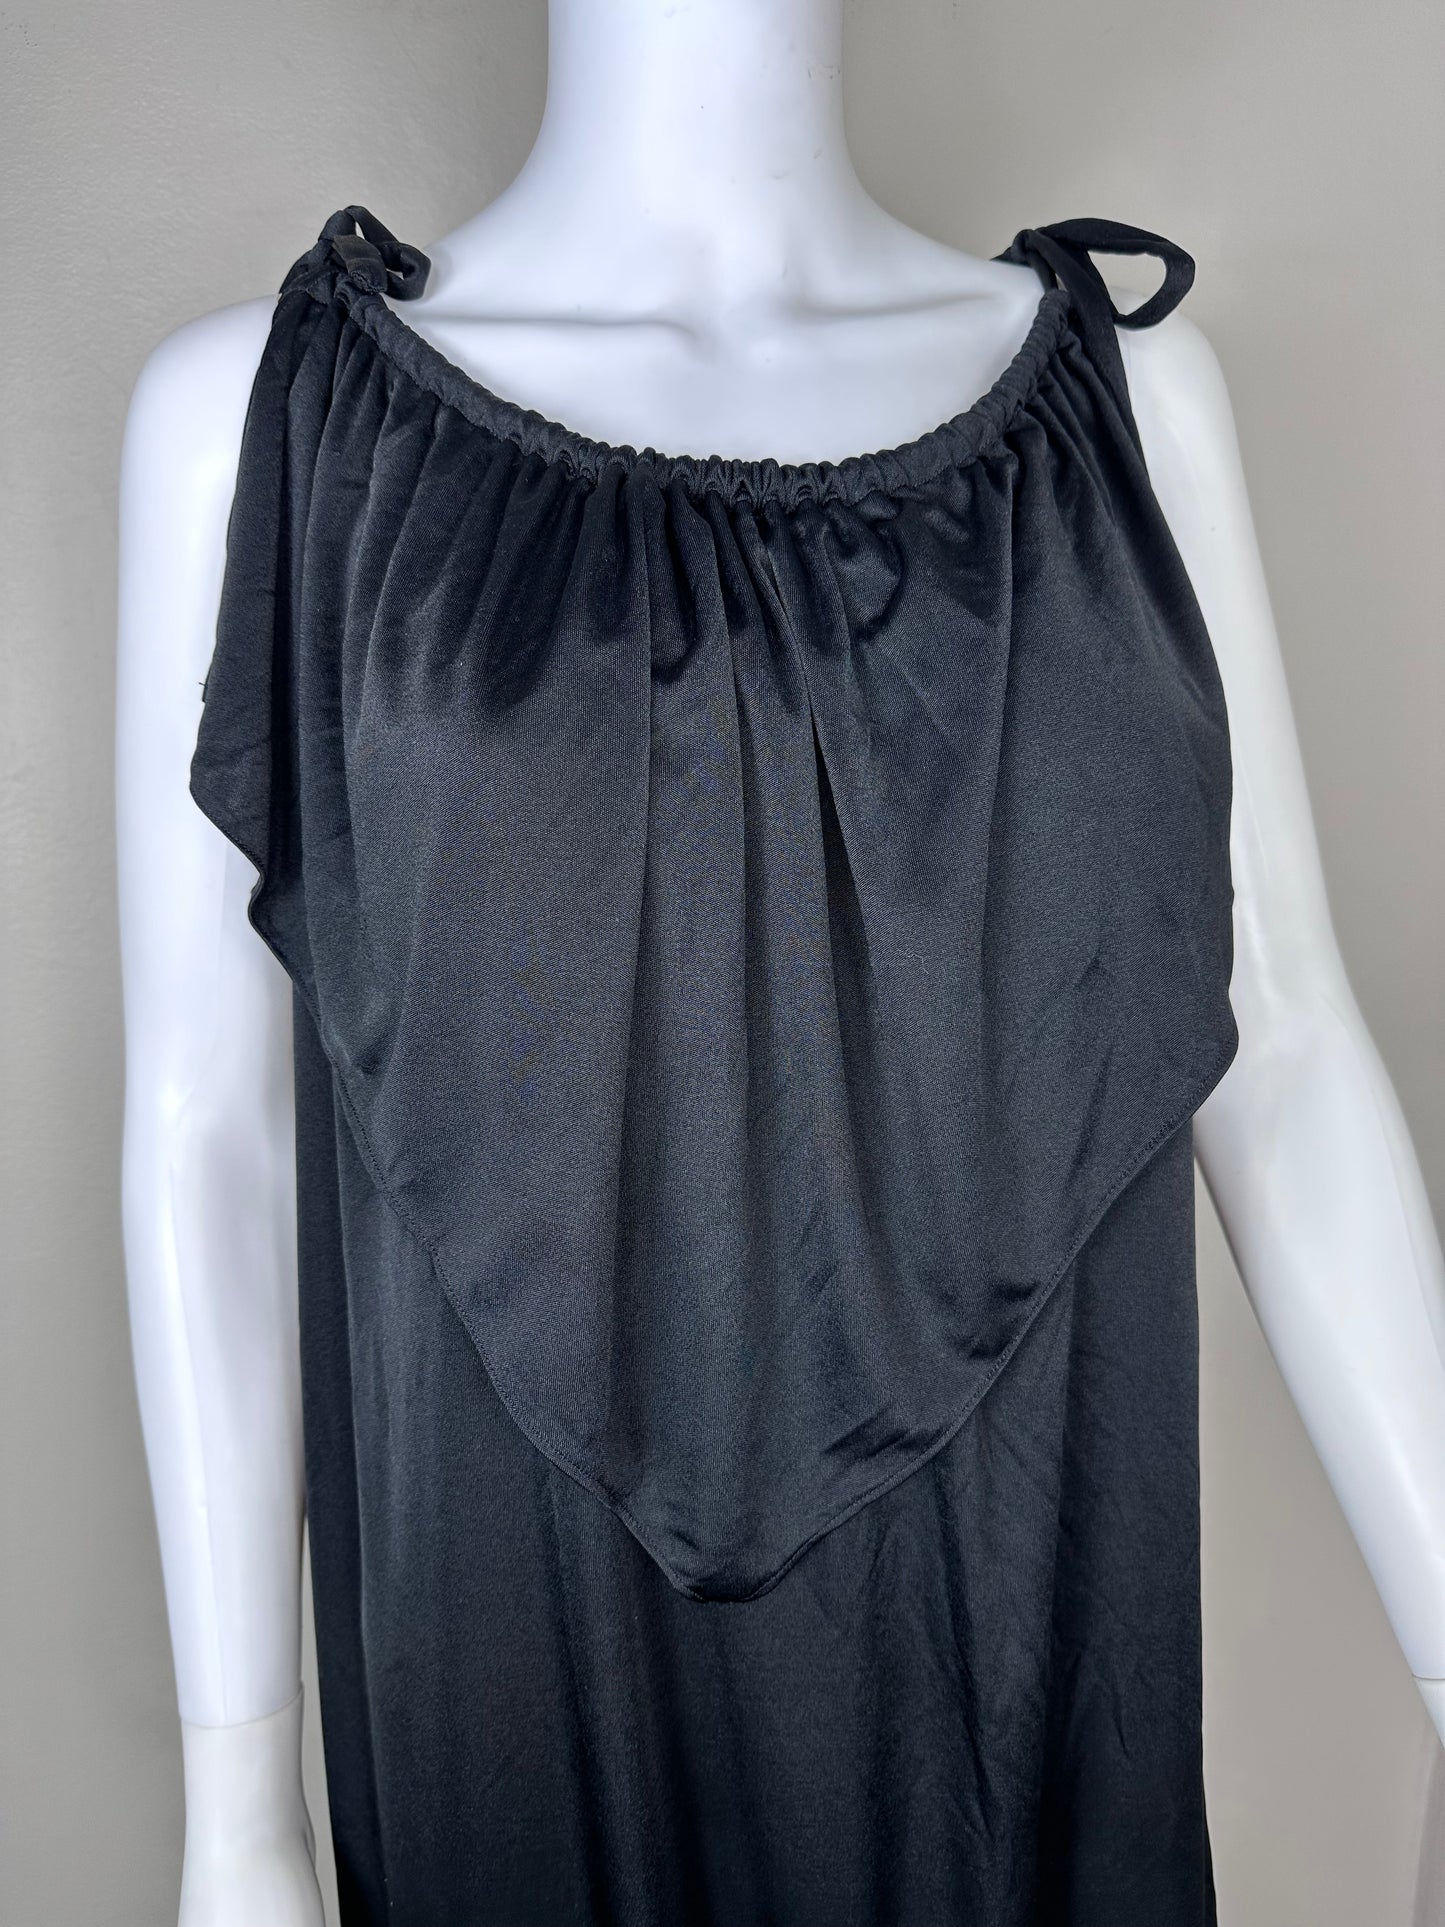 1970s Grecian Inspired Black Maxi Dress, Size 3X